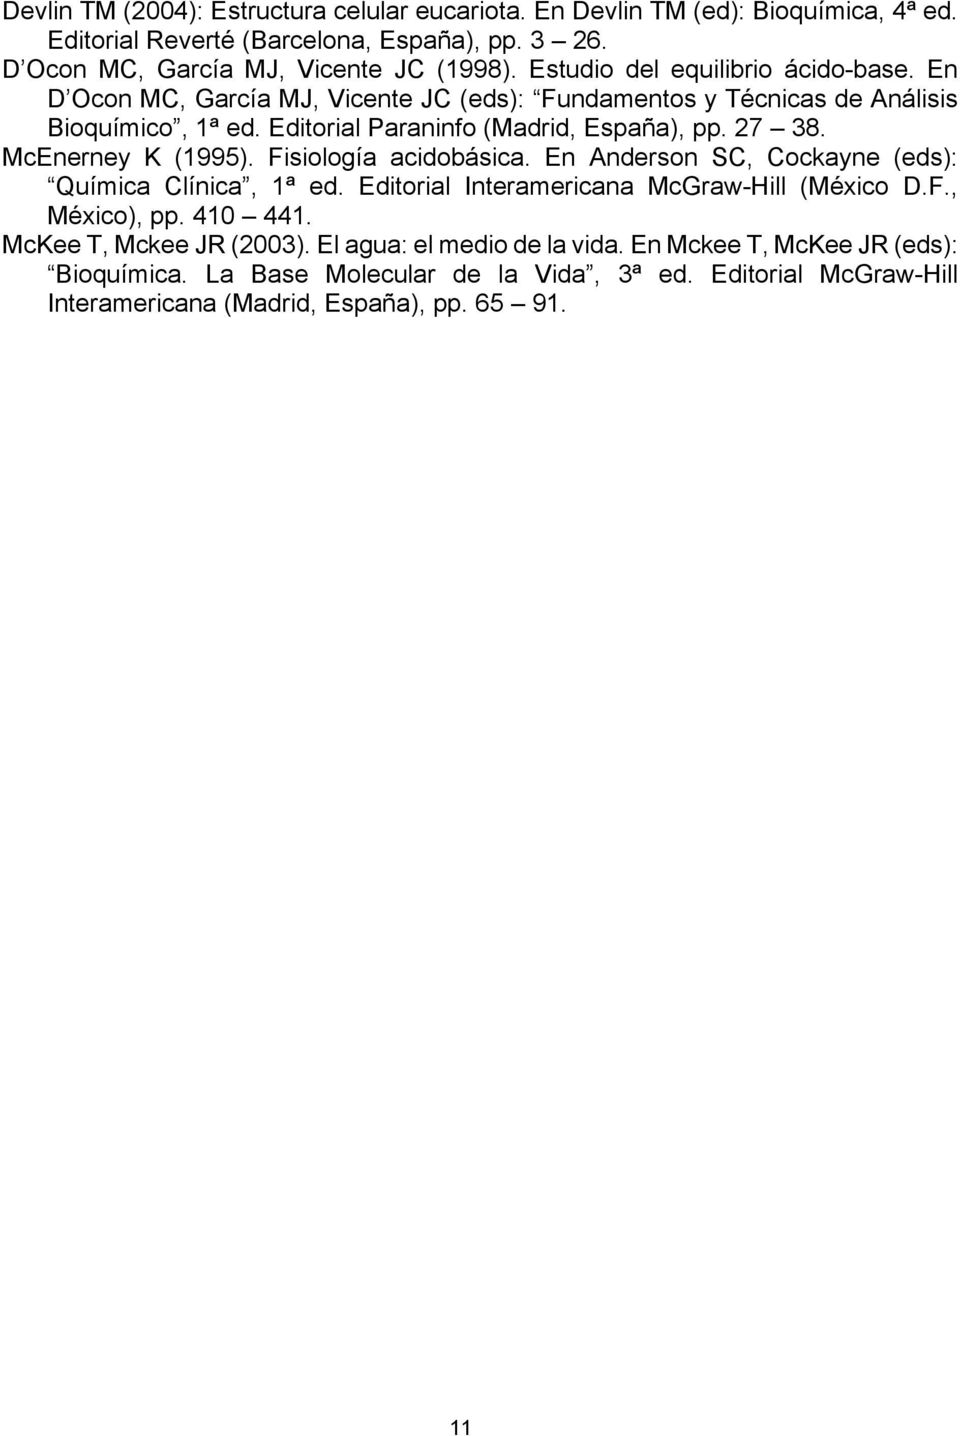 McEnerney K (1995). Fisiología acidobásica. En Anderson SC, Cockayne (eds): Química Clínica, 1ª ed. Editorial Interamericana McGraw-Hill (México D.F., México), pp. 410 441.